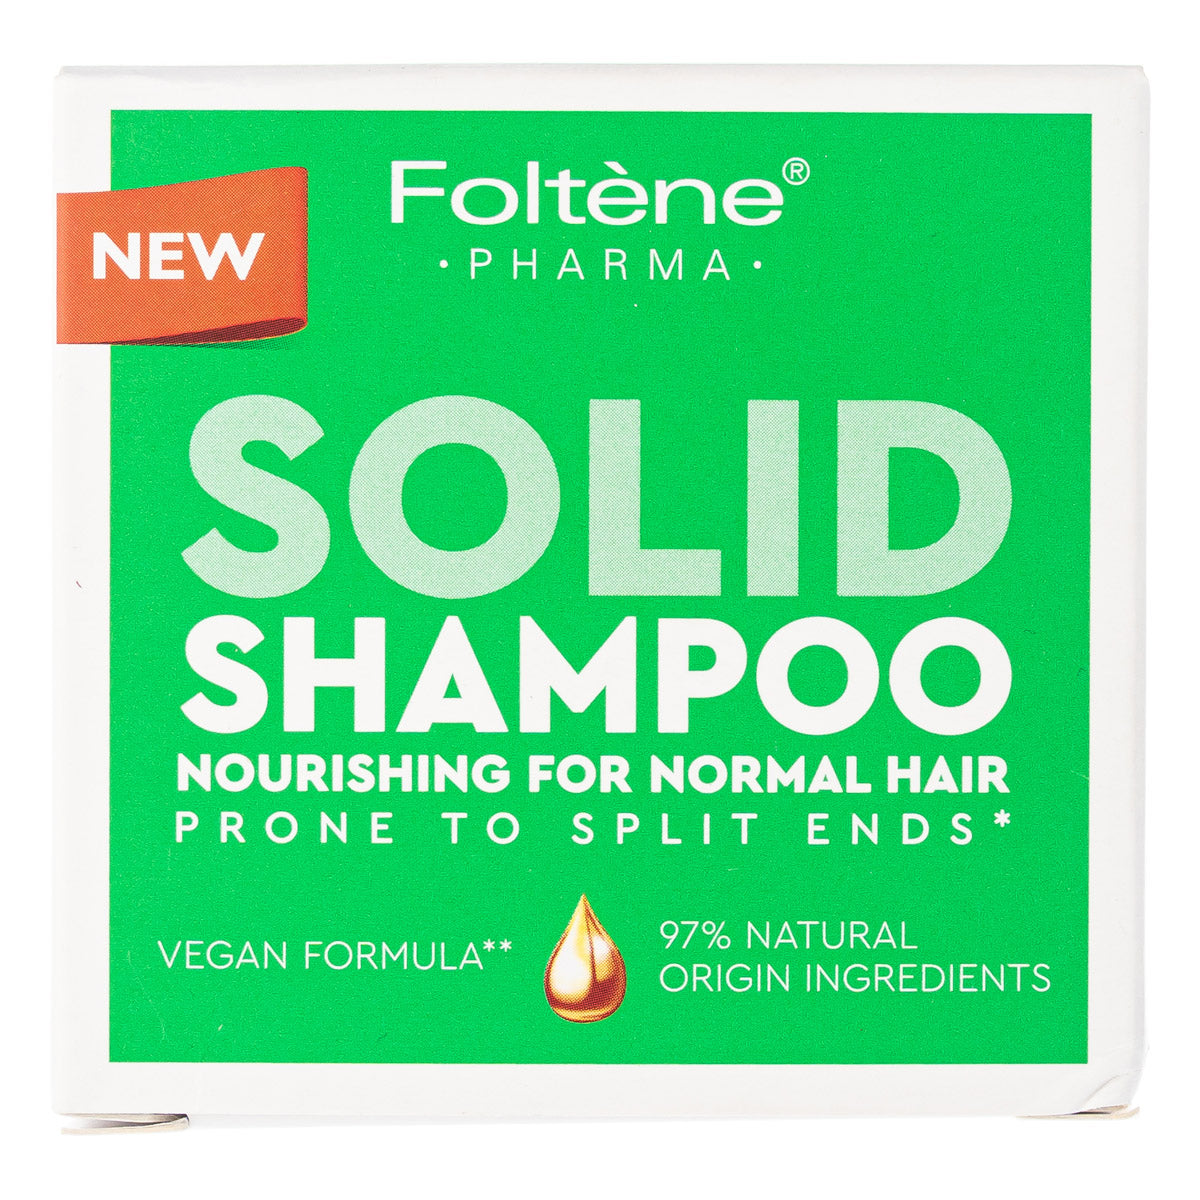 FOLTENE SOLID SHAMPOO NOURISHING FOR NORMAL HAIR 75G